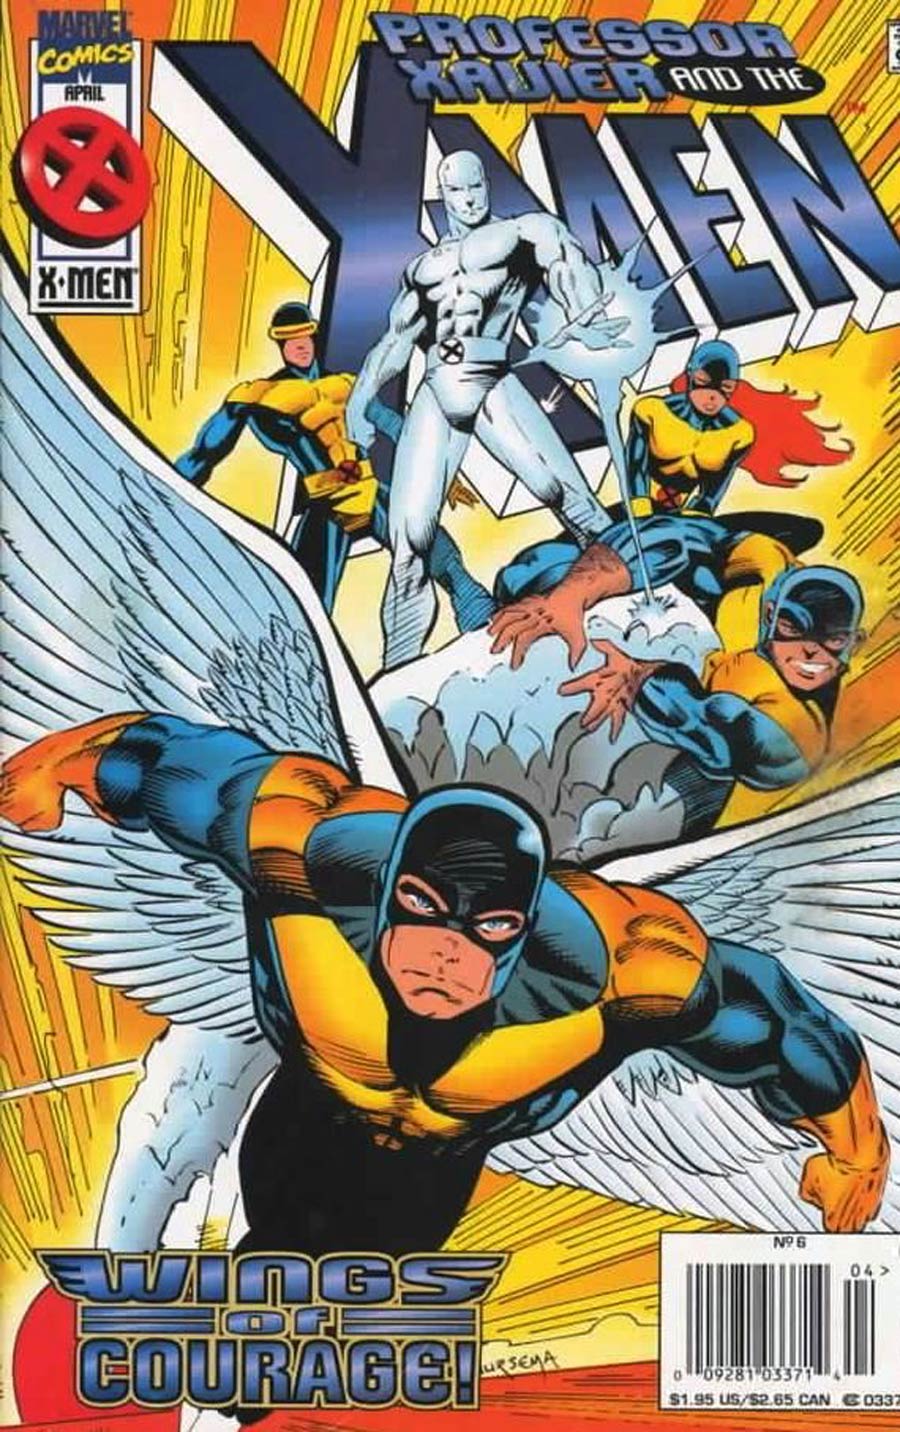 Professor Xavier And The X-Men #6 Cover B Flipbook